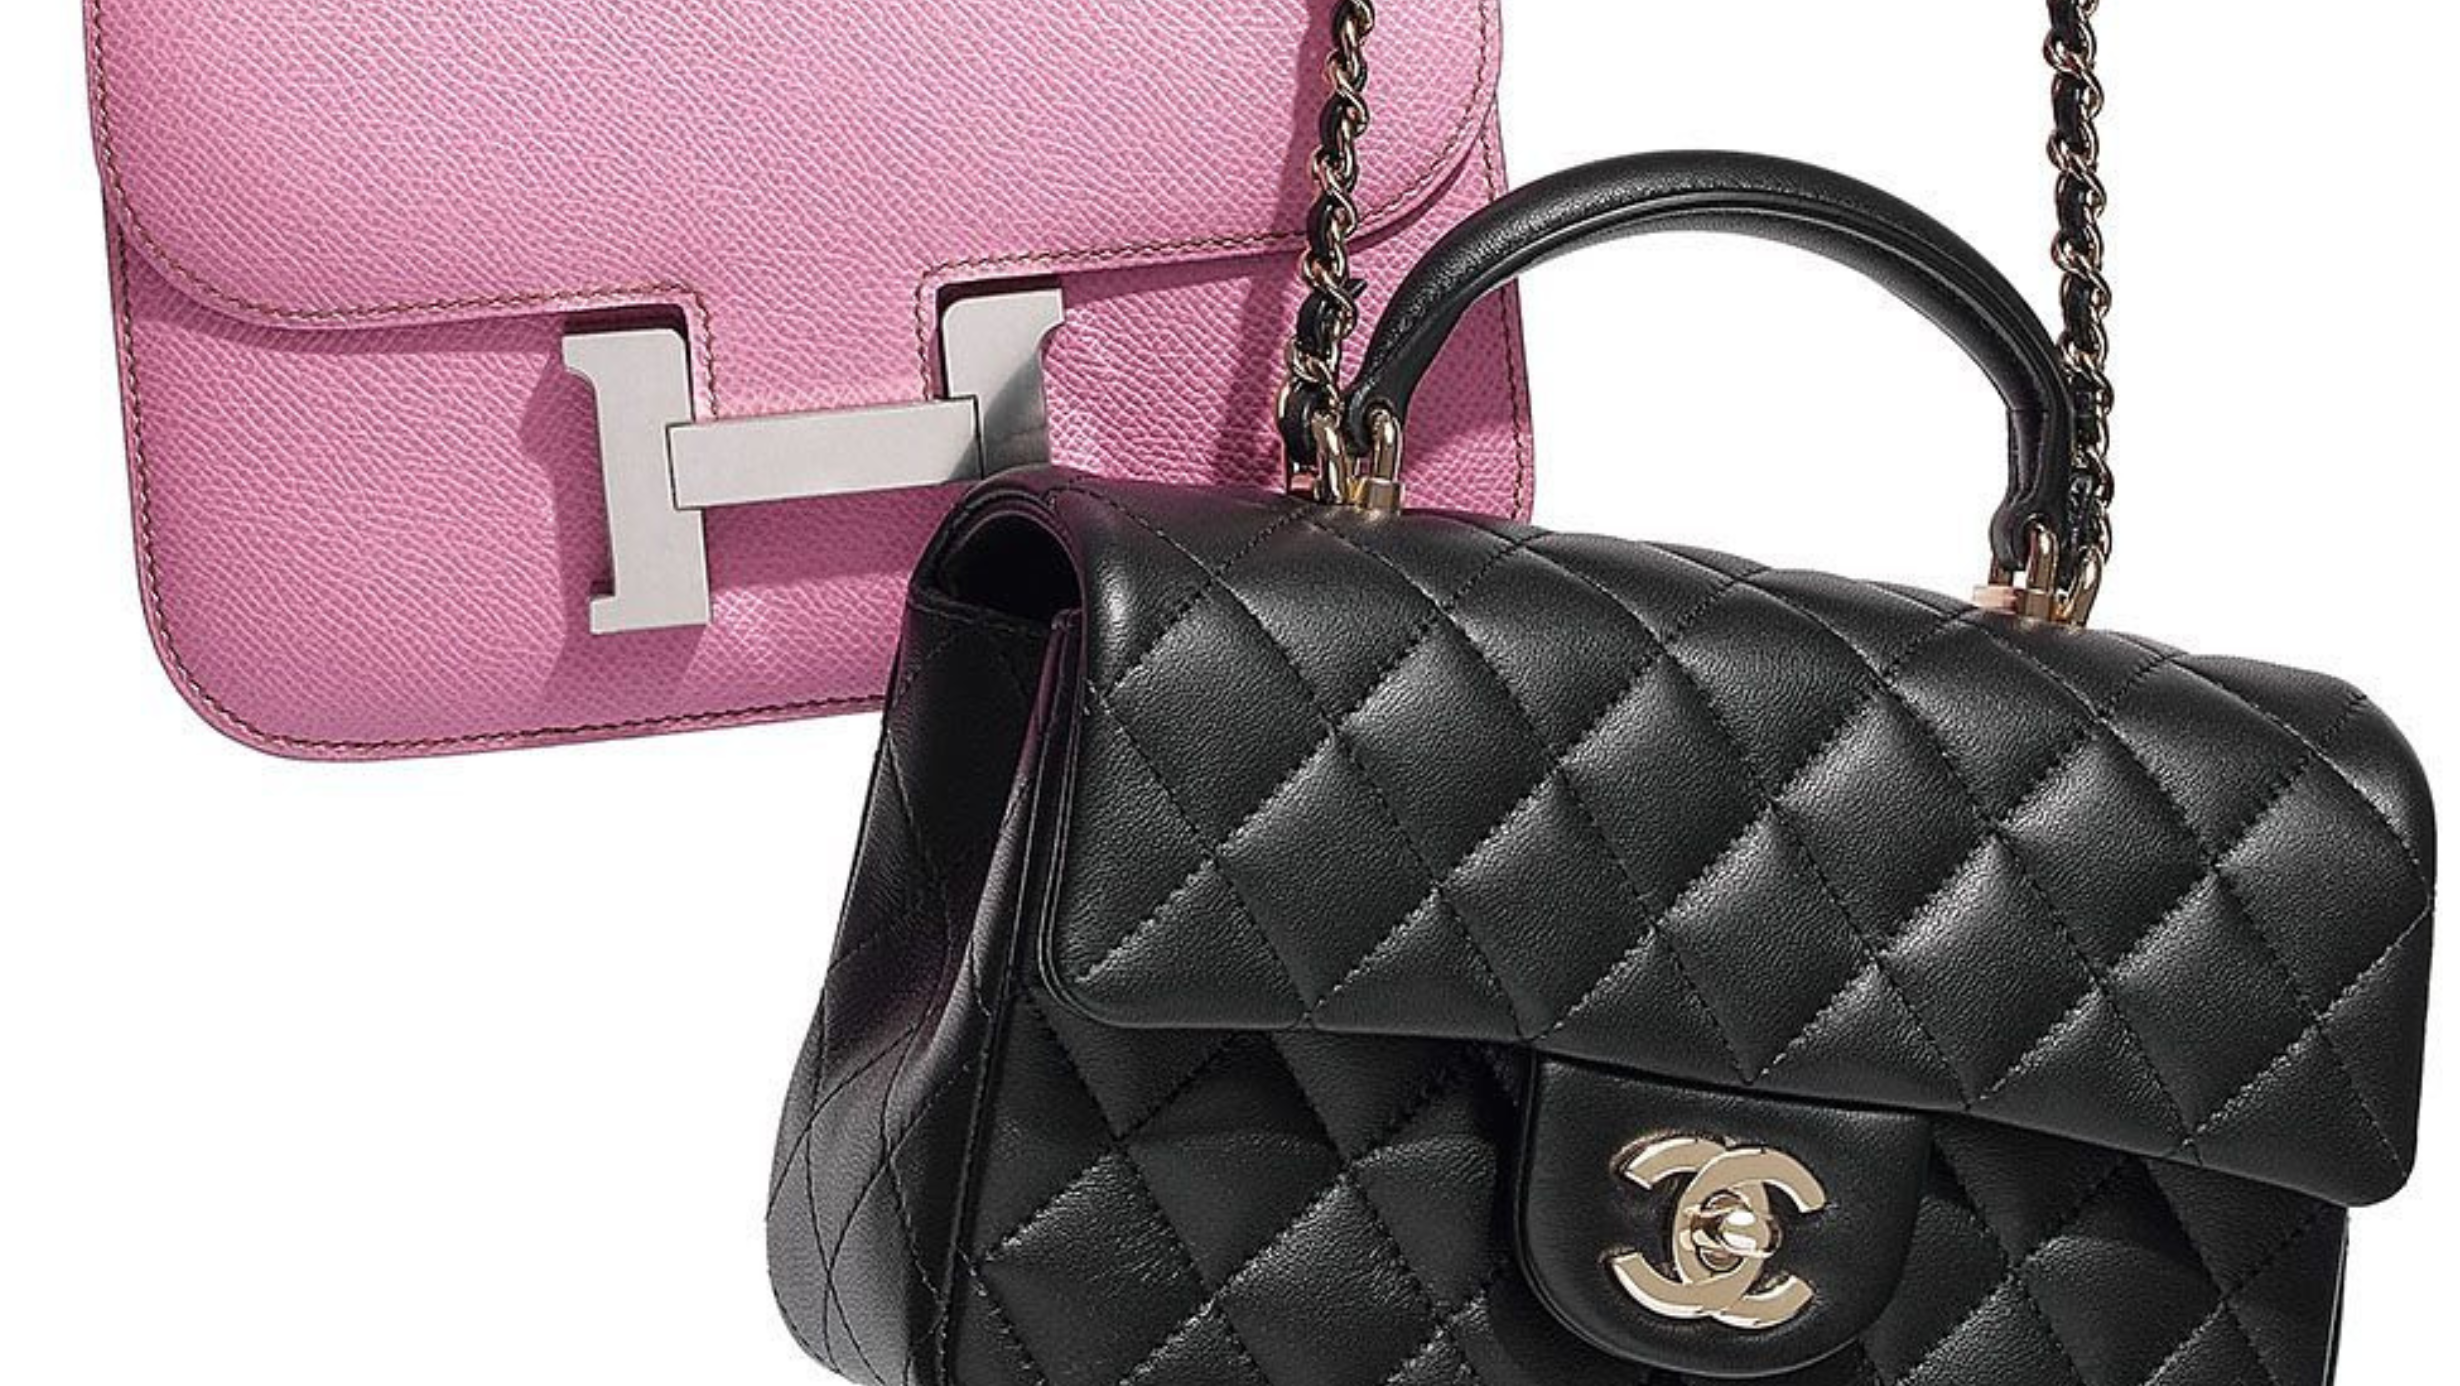 Shop All Discounted, Pre owned Designer Handbags